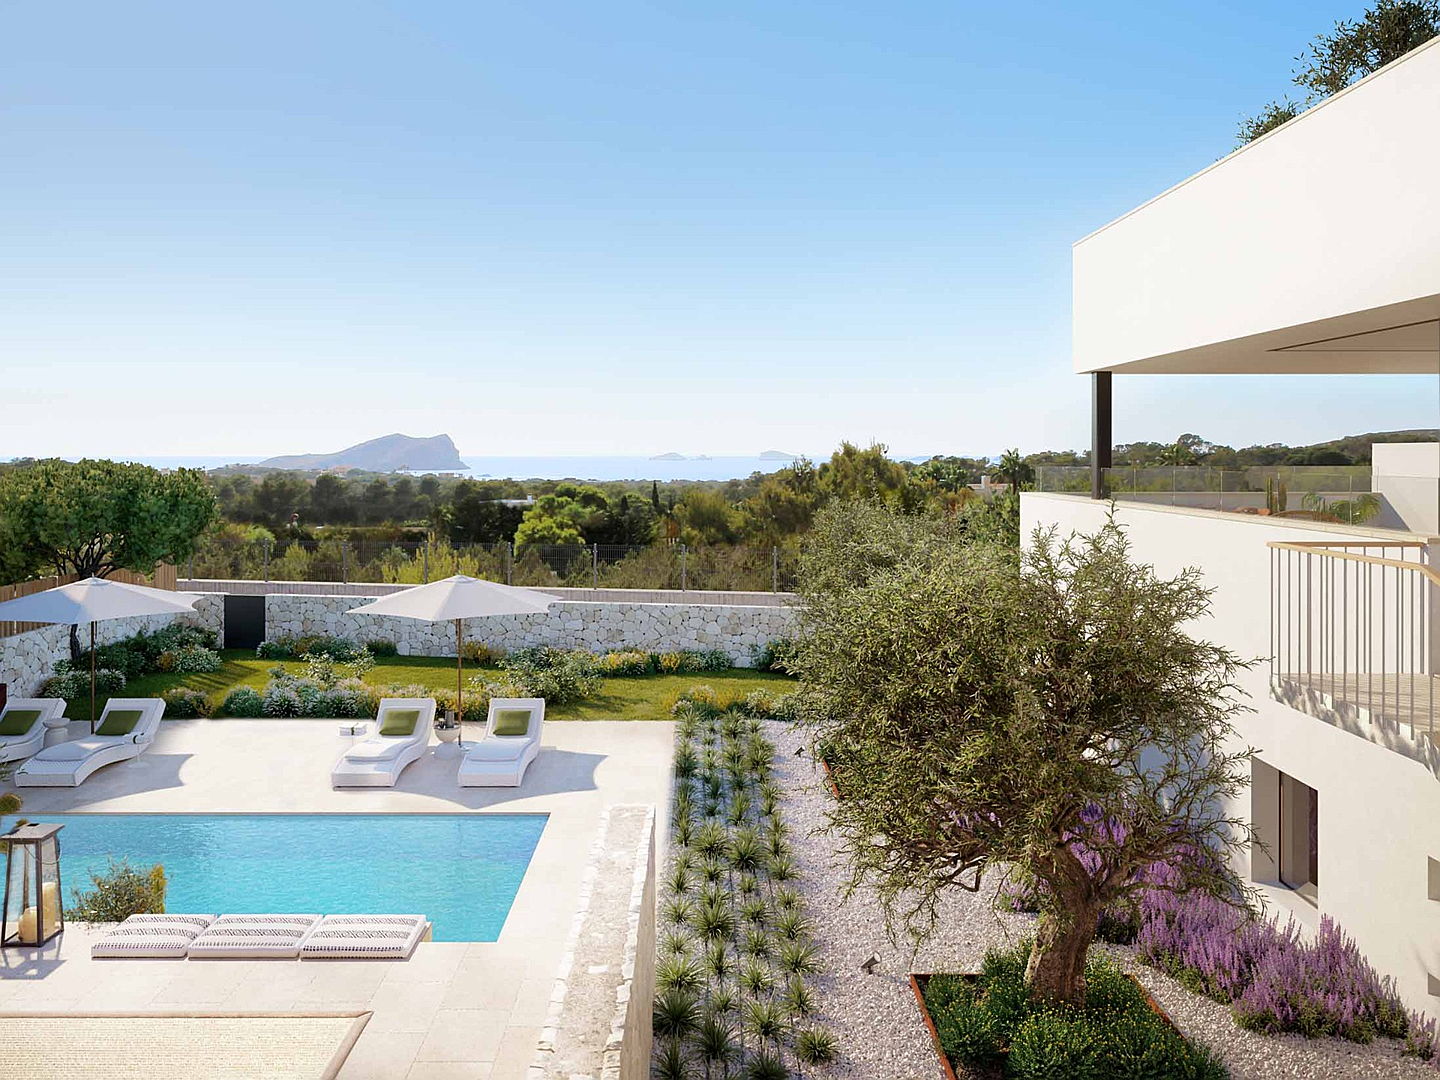  Ibiza
- luxury-new-development-with-sunset-views